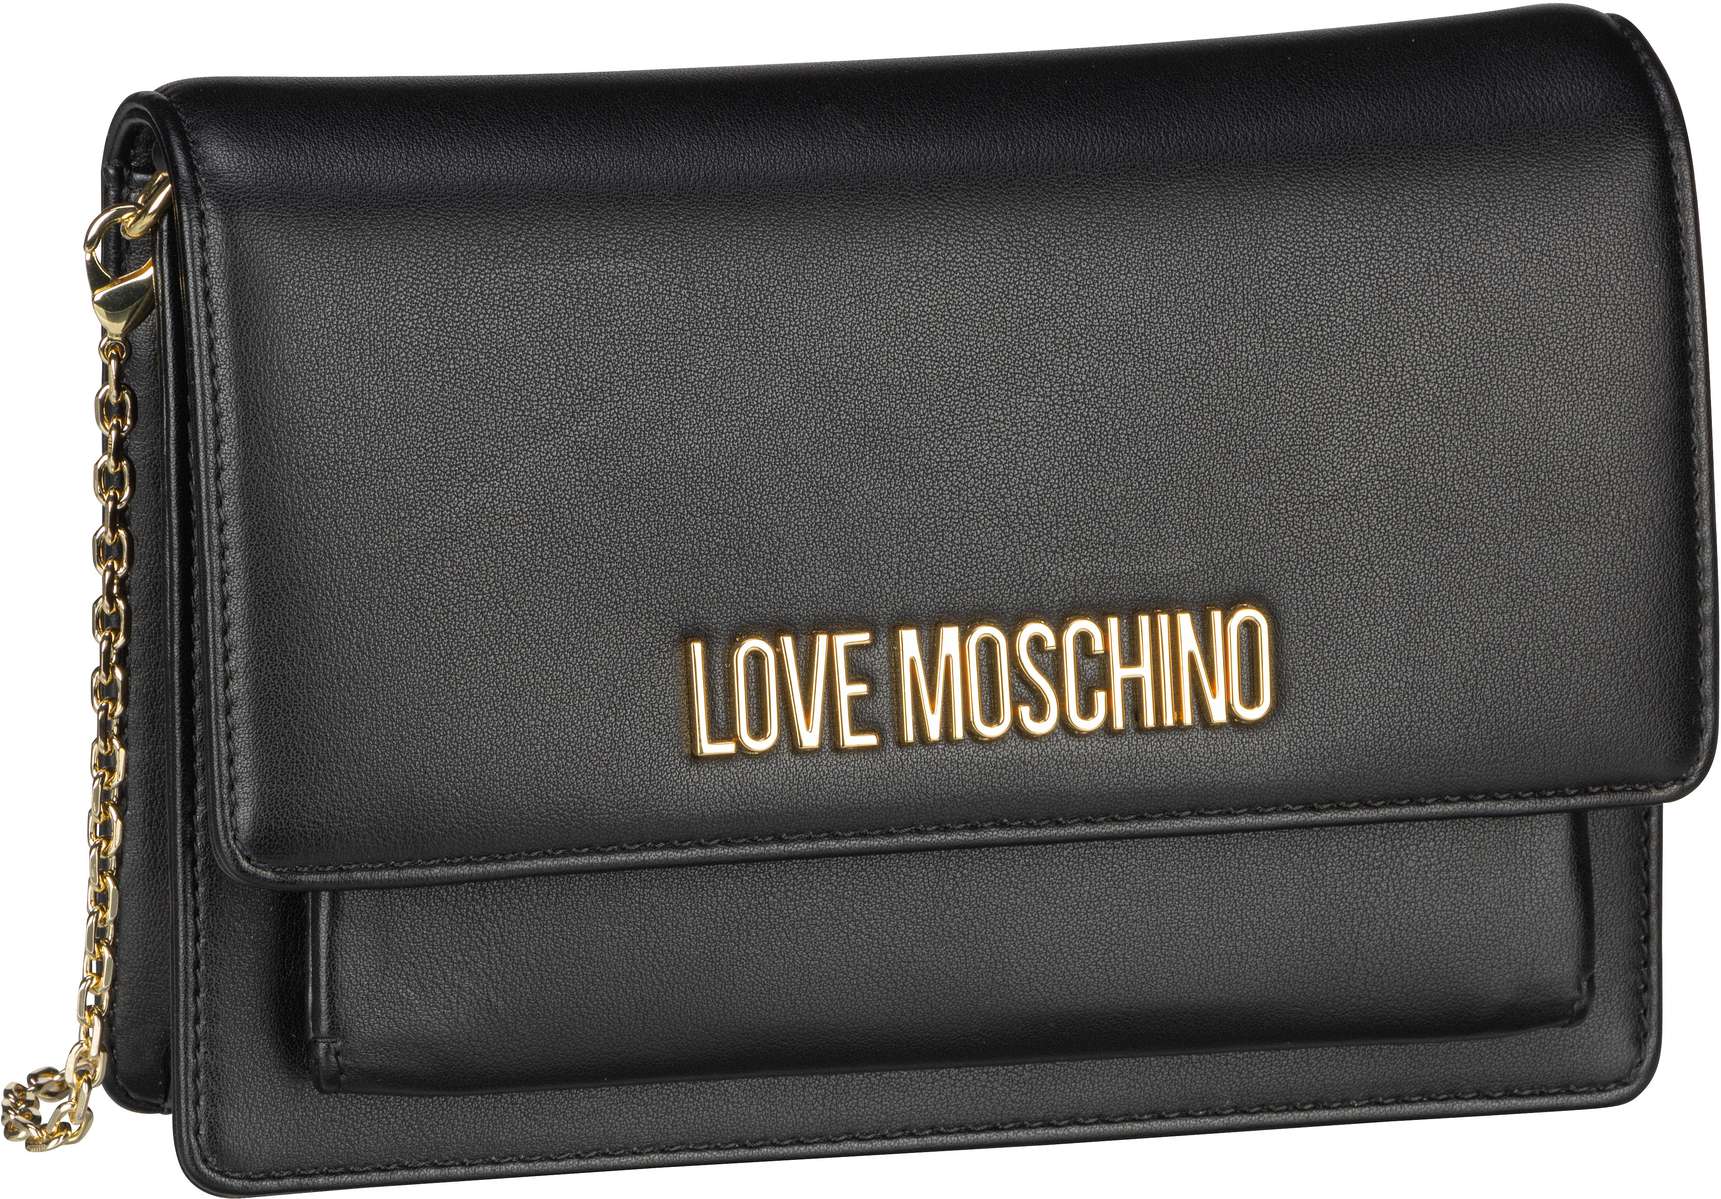 Love Moschino Smart Daily Bag 4095 - Black